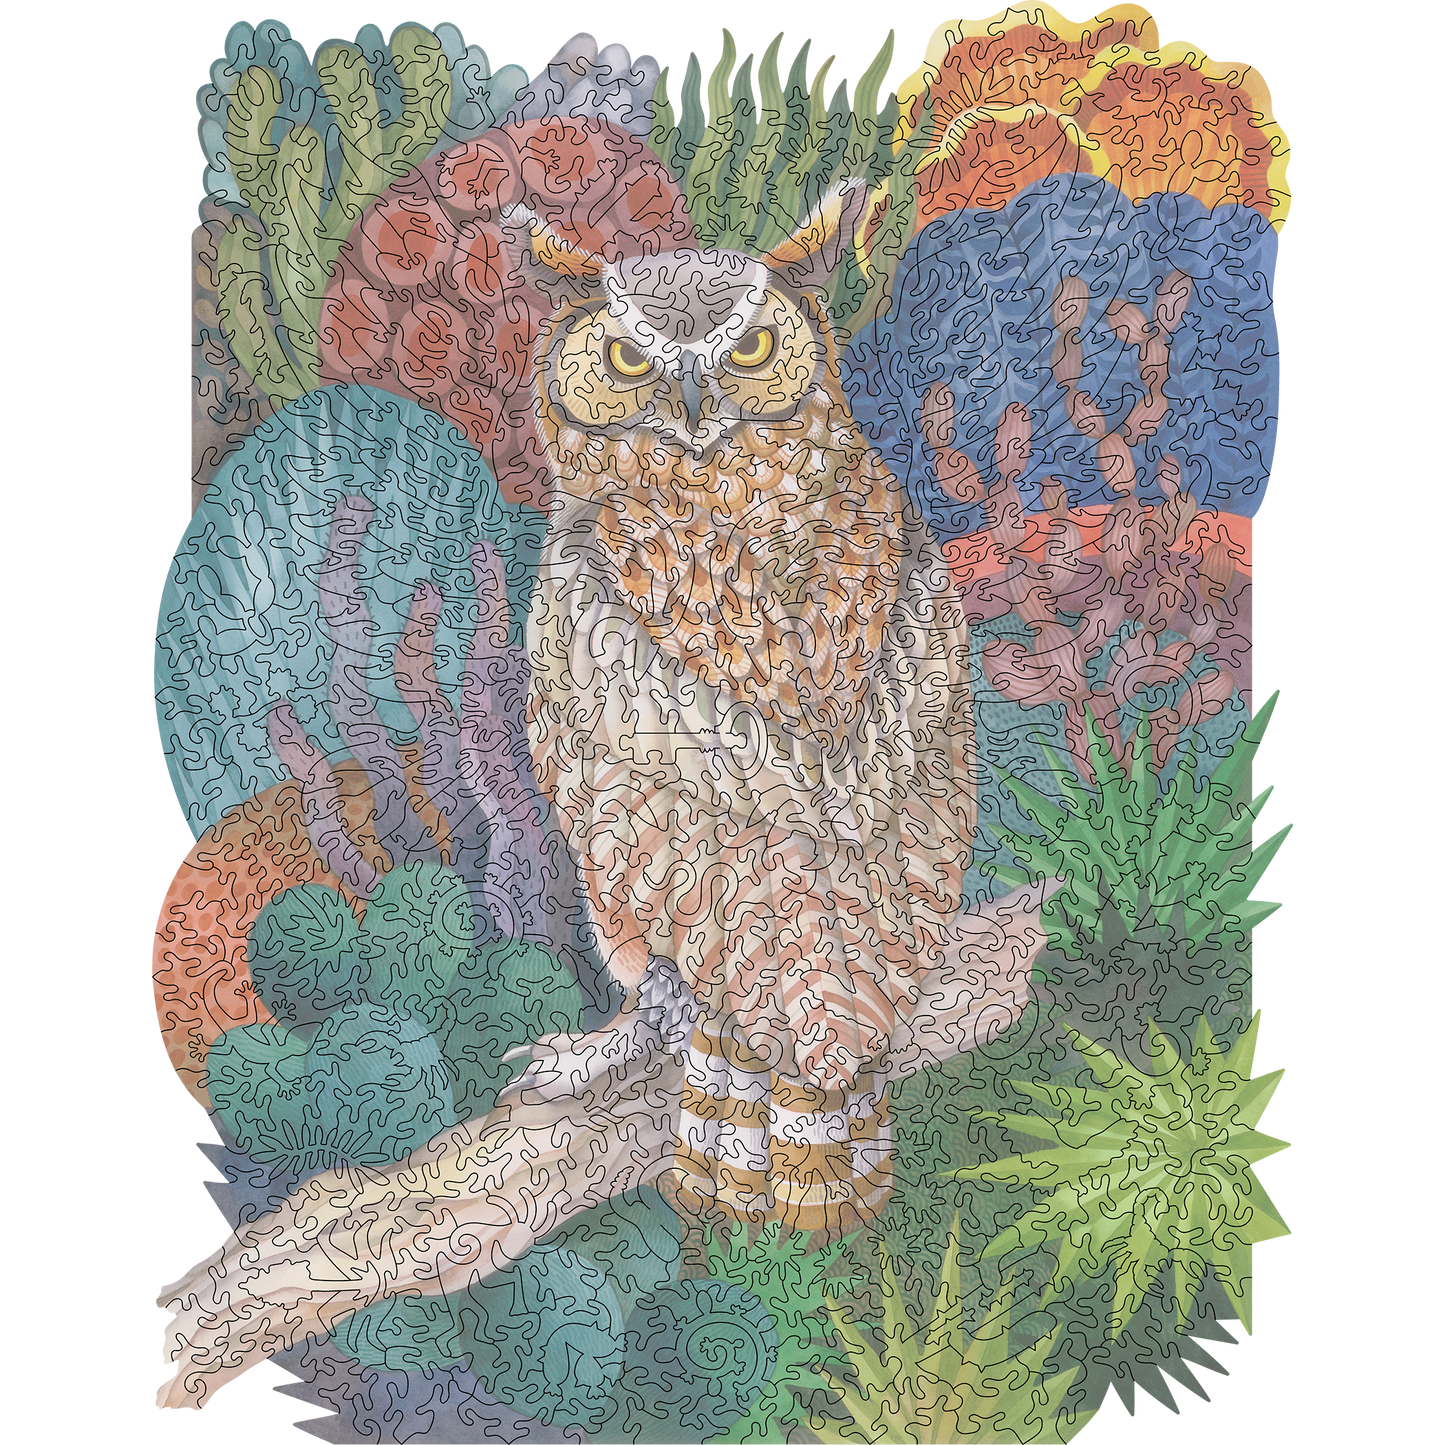 Desert Owl (605 Pieces)